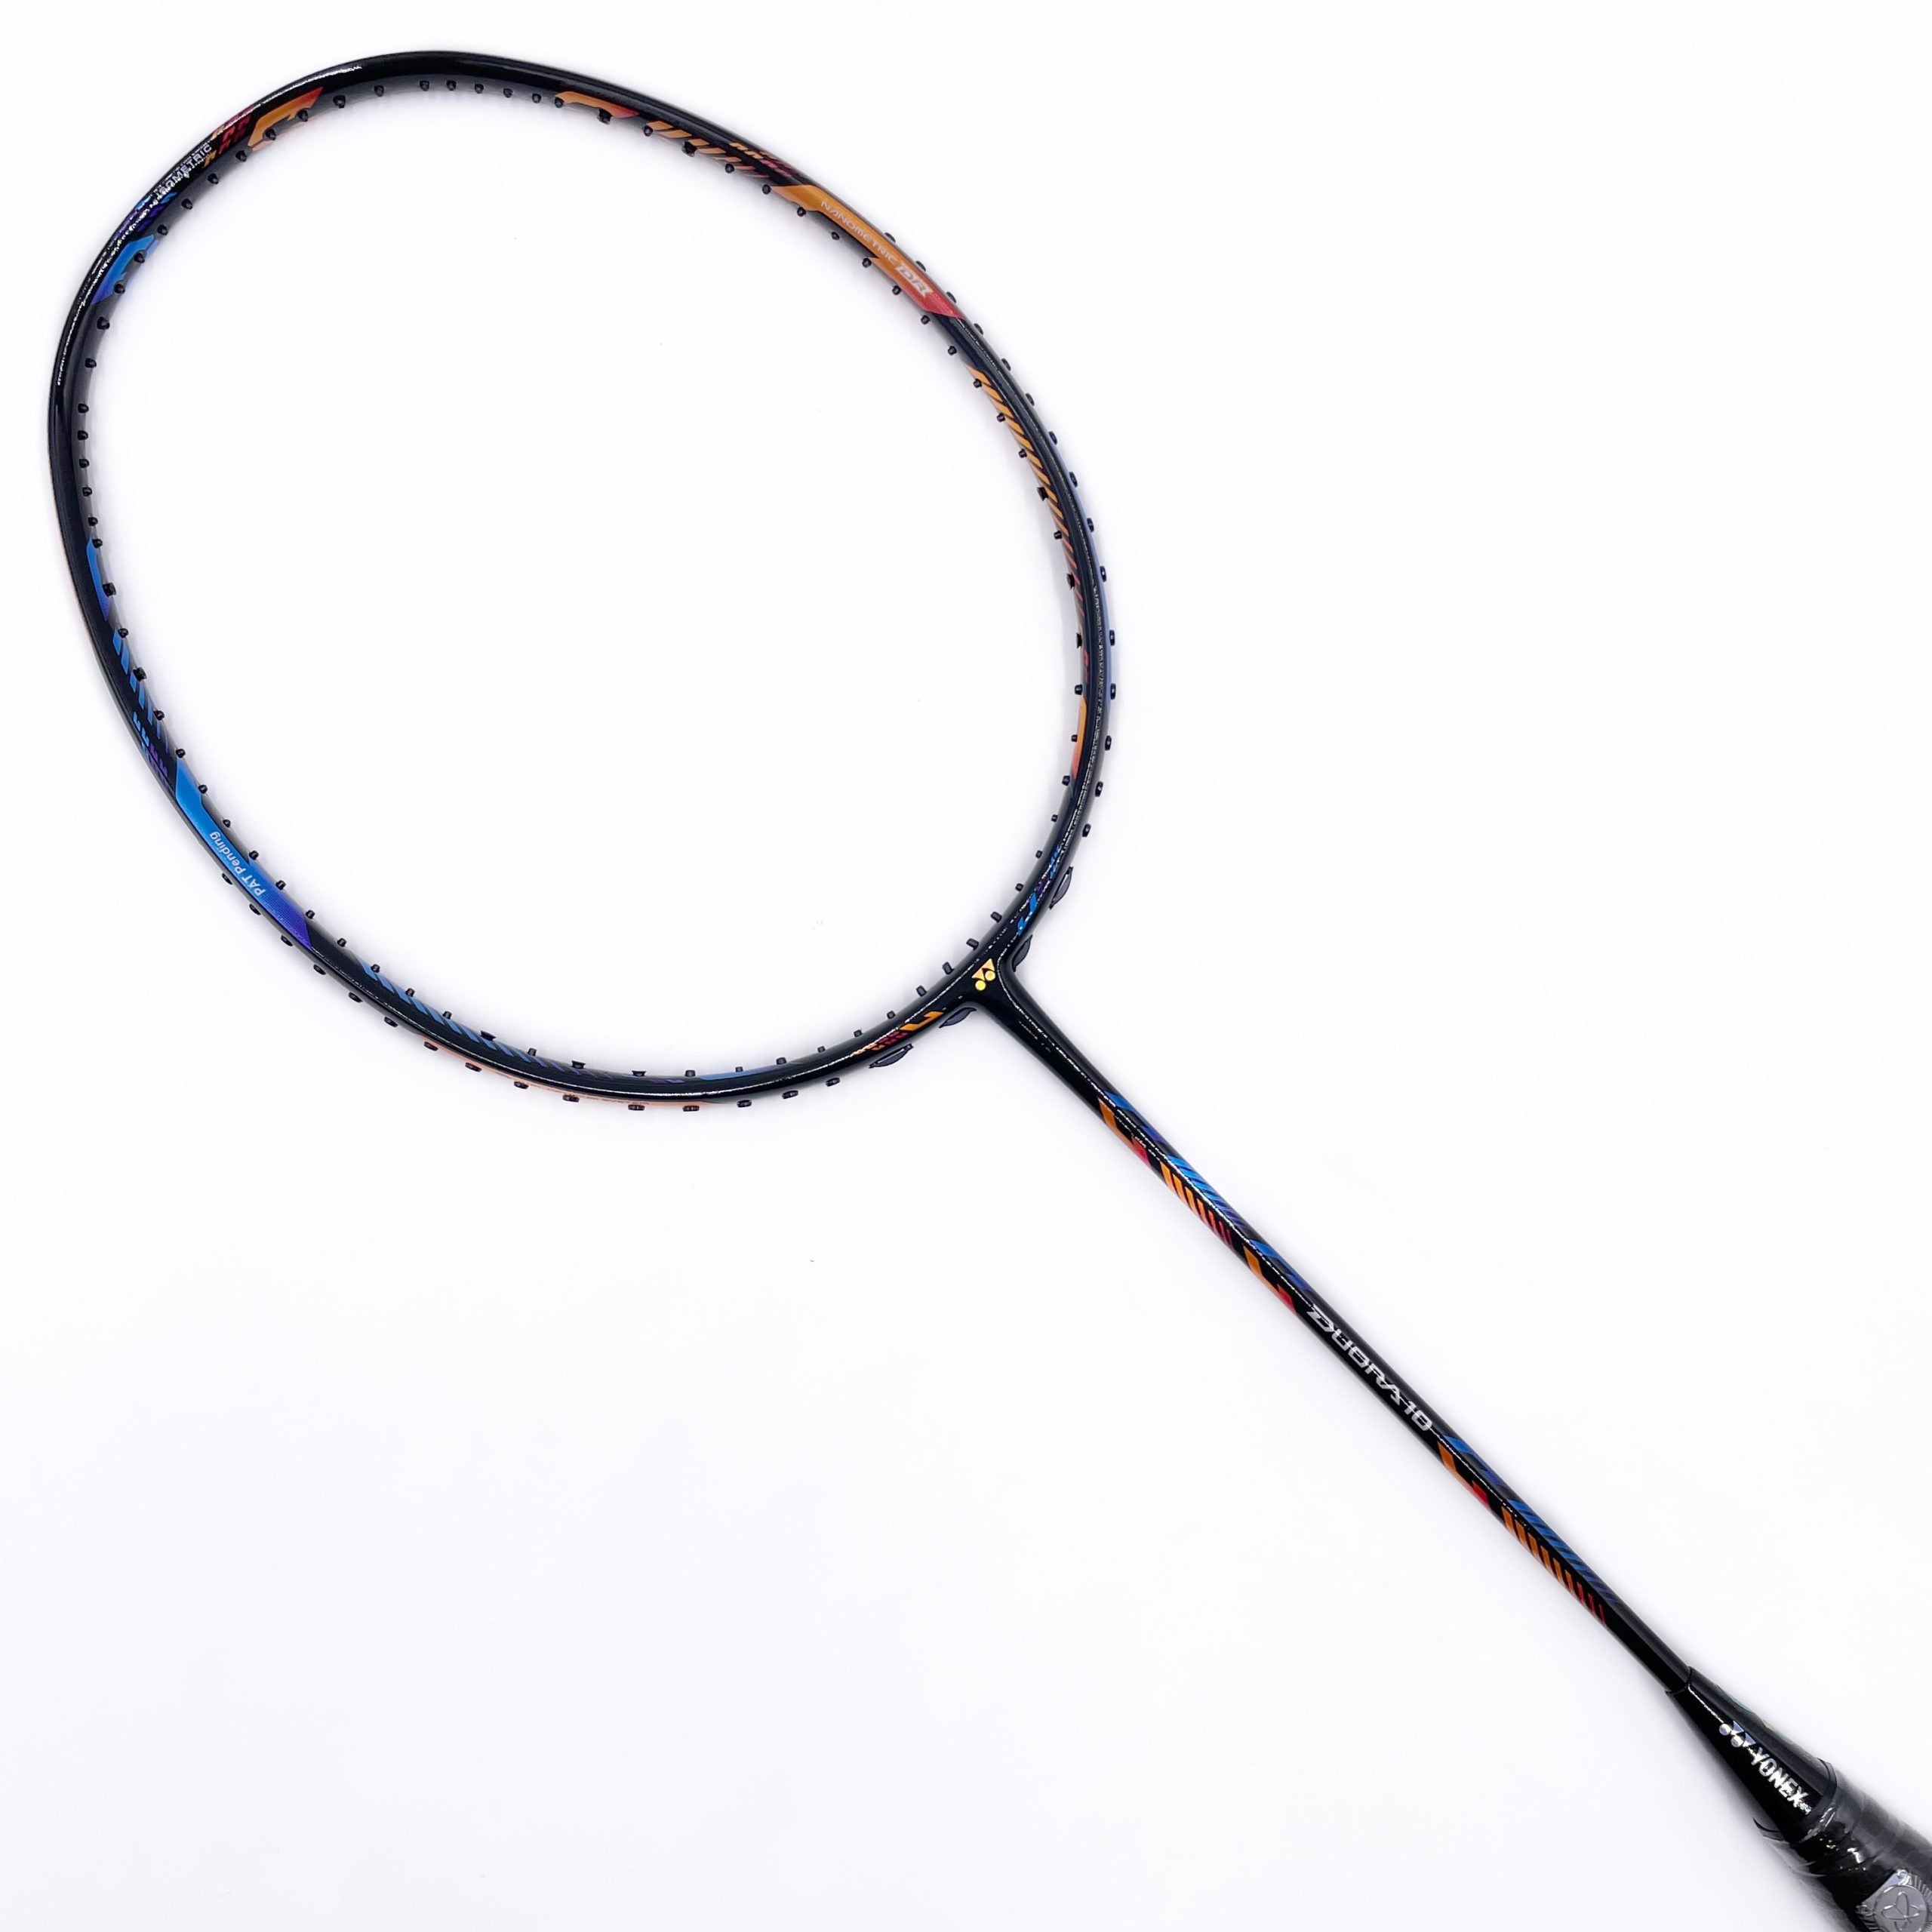 Yonex Duora 10 Badminton Racket